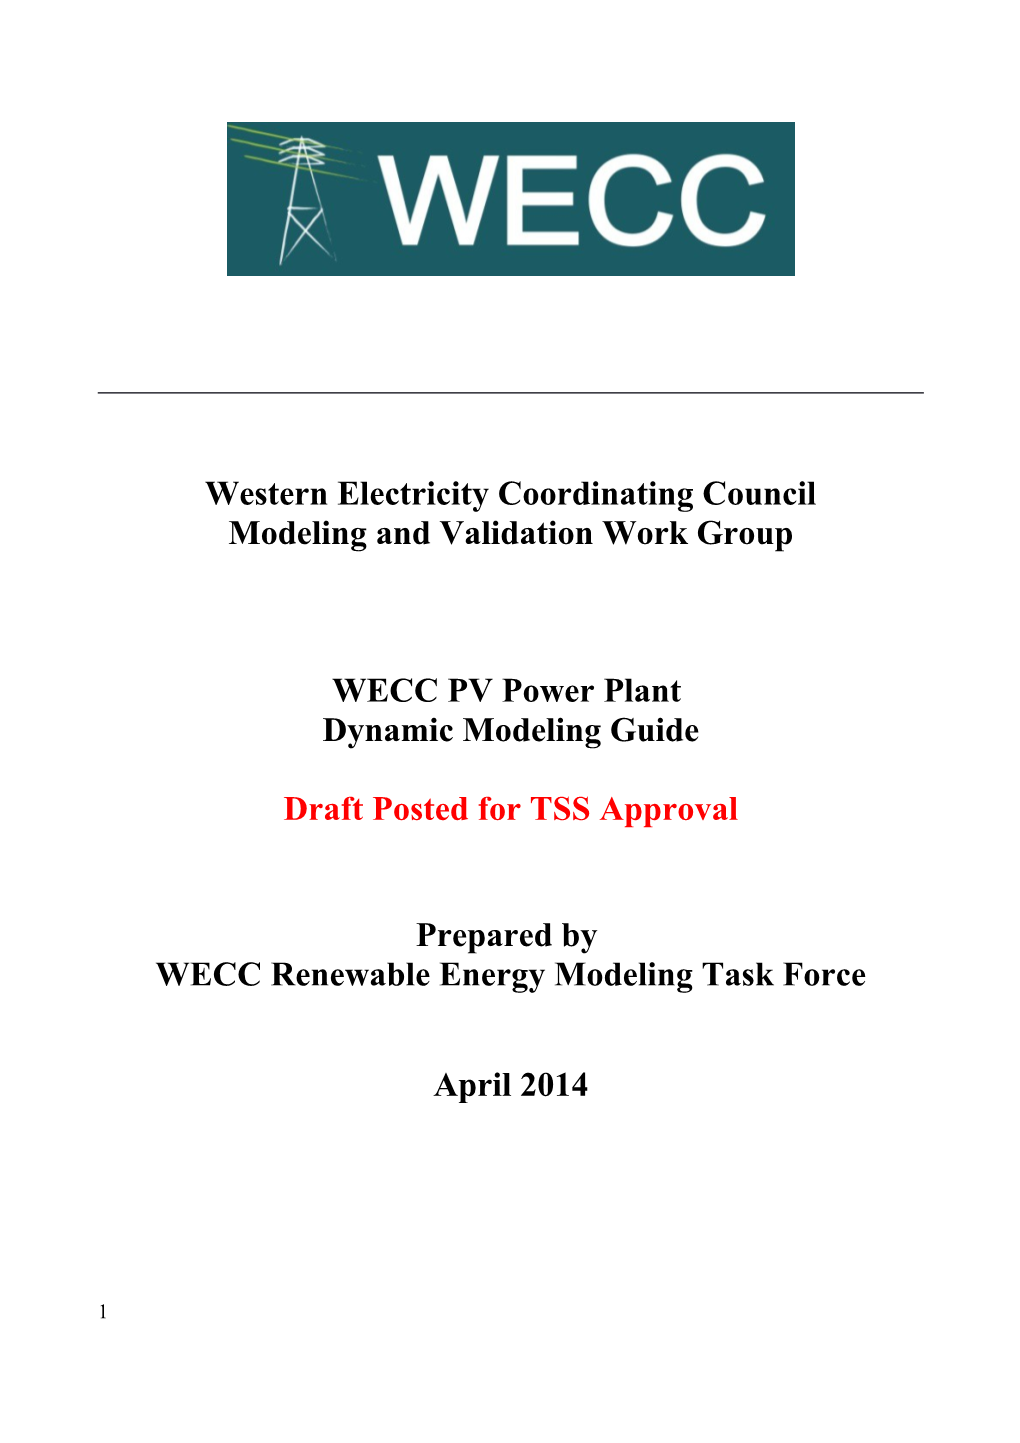 WECC WPP Power Flow Modeling Guidelines